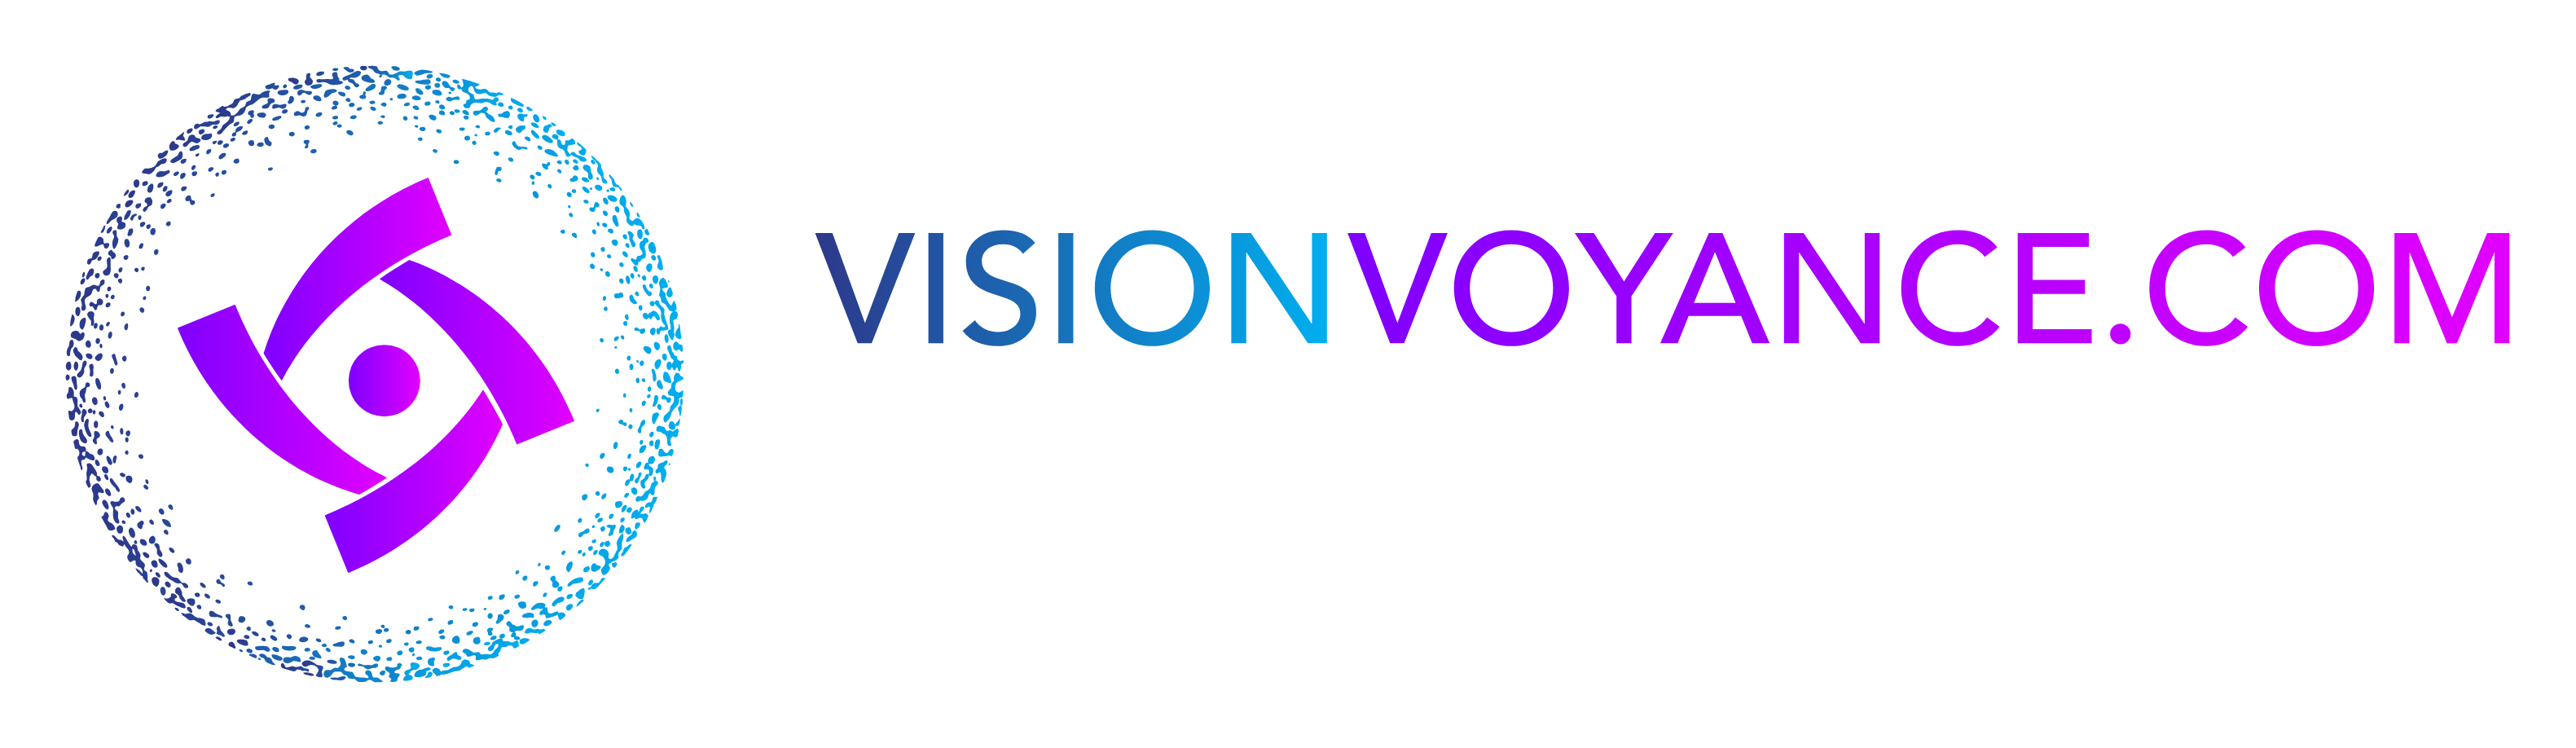 vision voyance